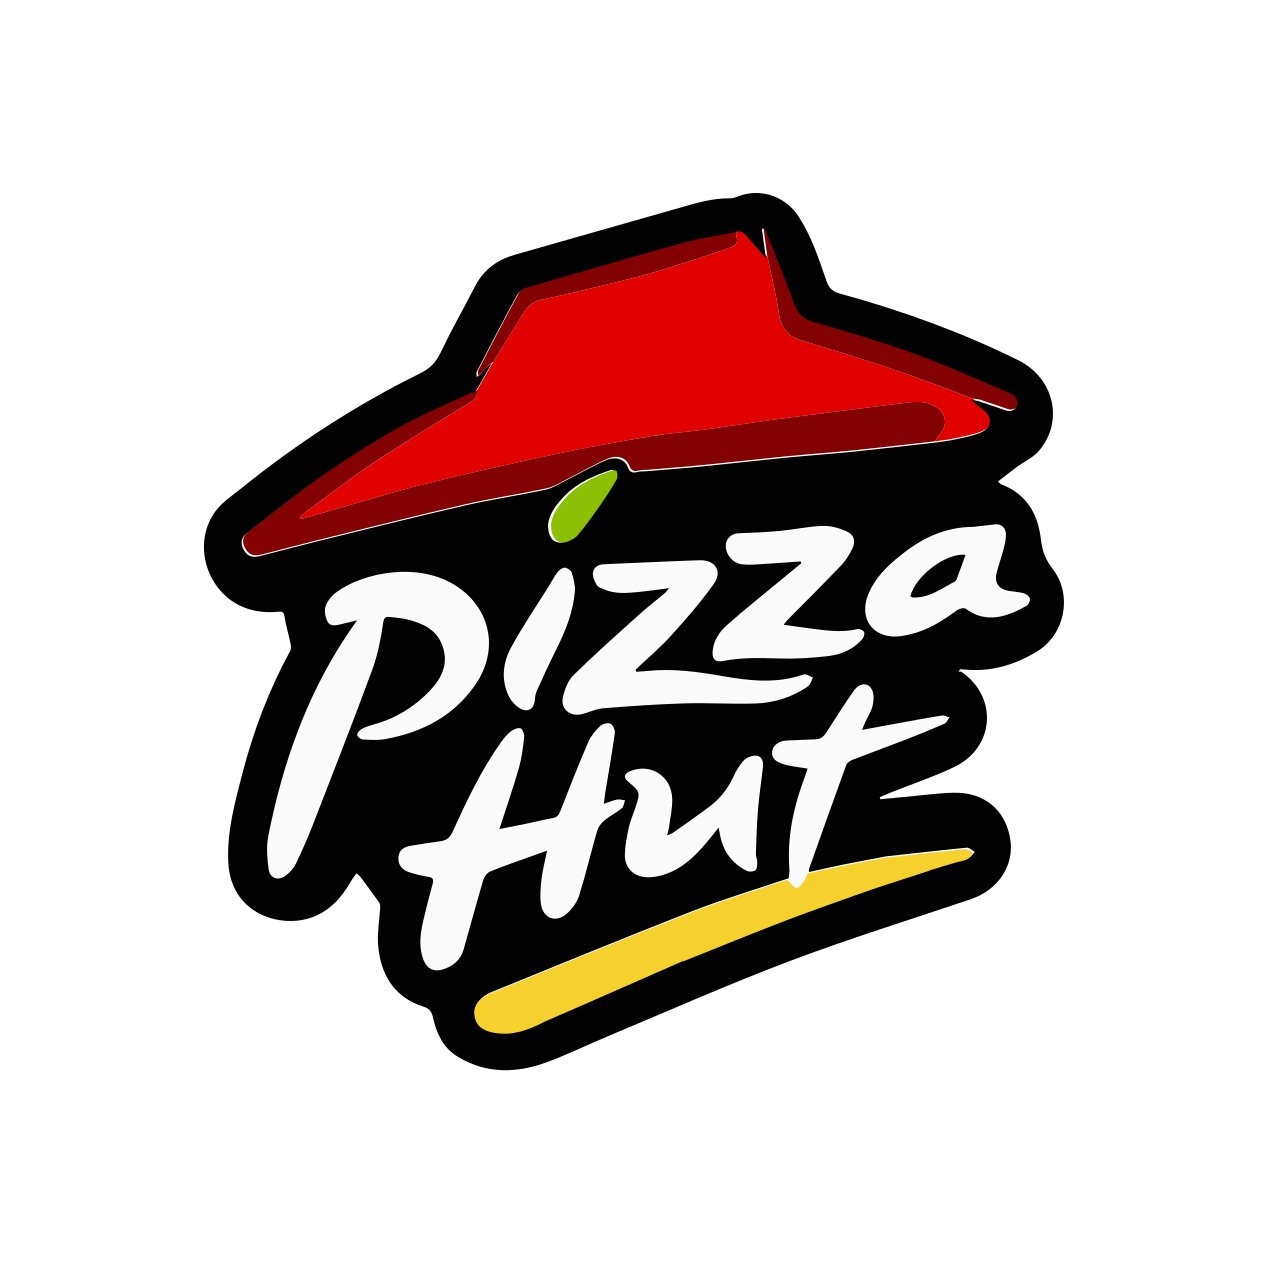 Pizza Hut, Pizza Hut Svg, Logo, Pizza Logo, Sign, Pizza, Pizza Svg, Clipart, Clipart Svg, Pizza Clipart, Fast Food, Restaurant, Pizza Party - Etsy UK